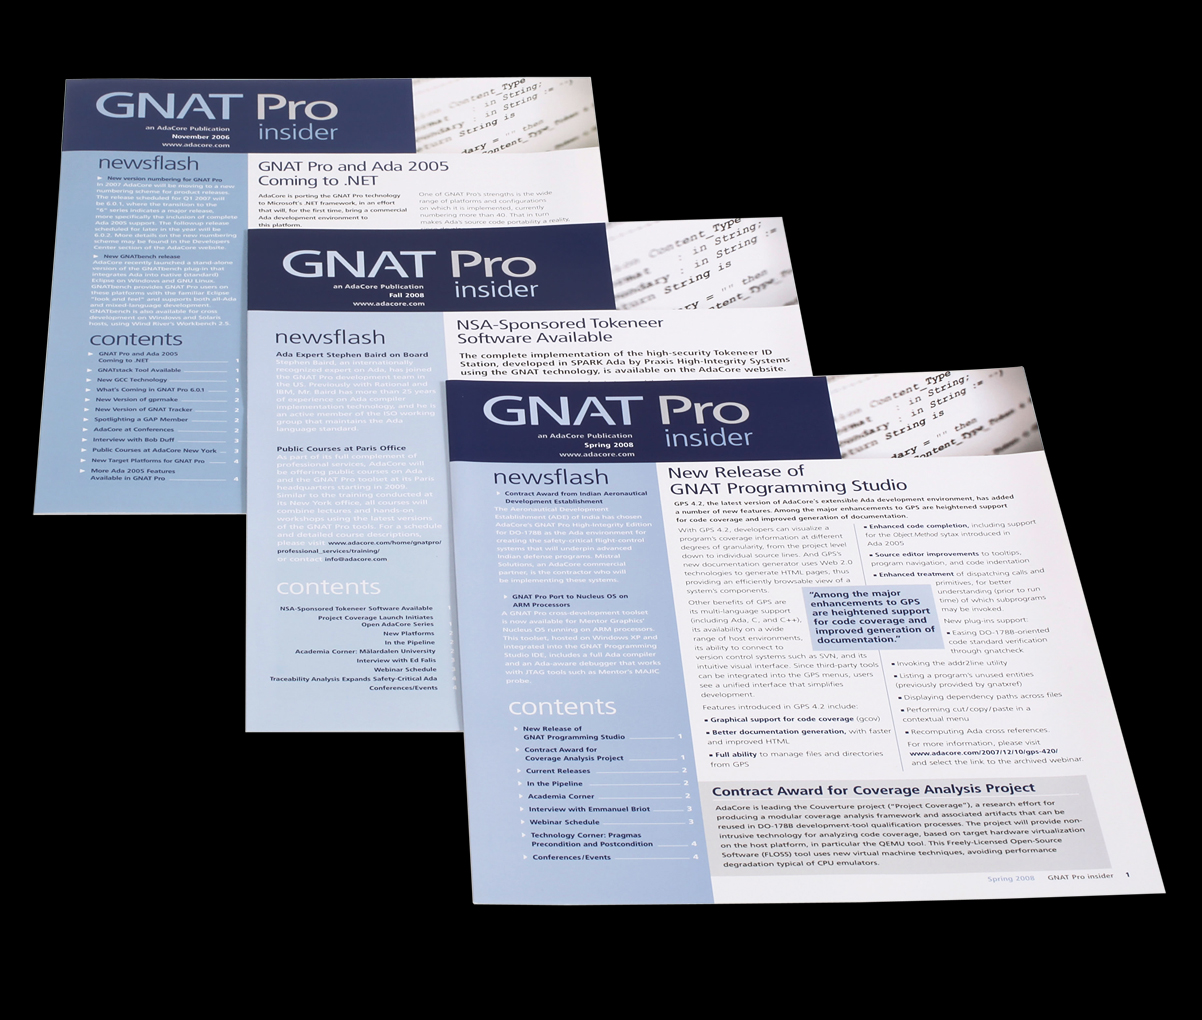 AdaCore - GNAT Pro insider newsletters